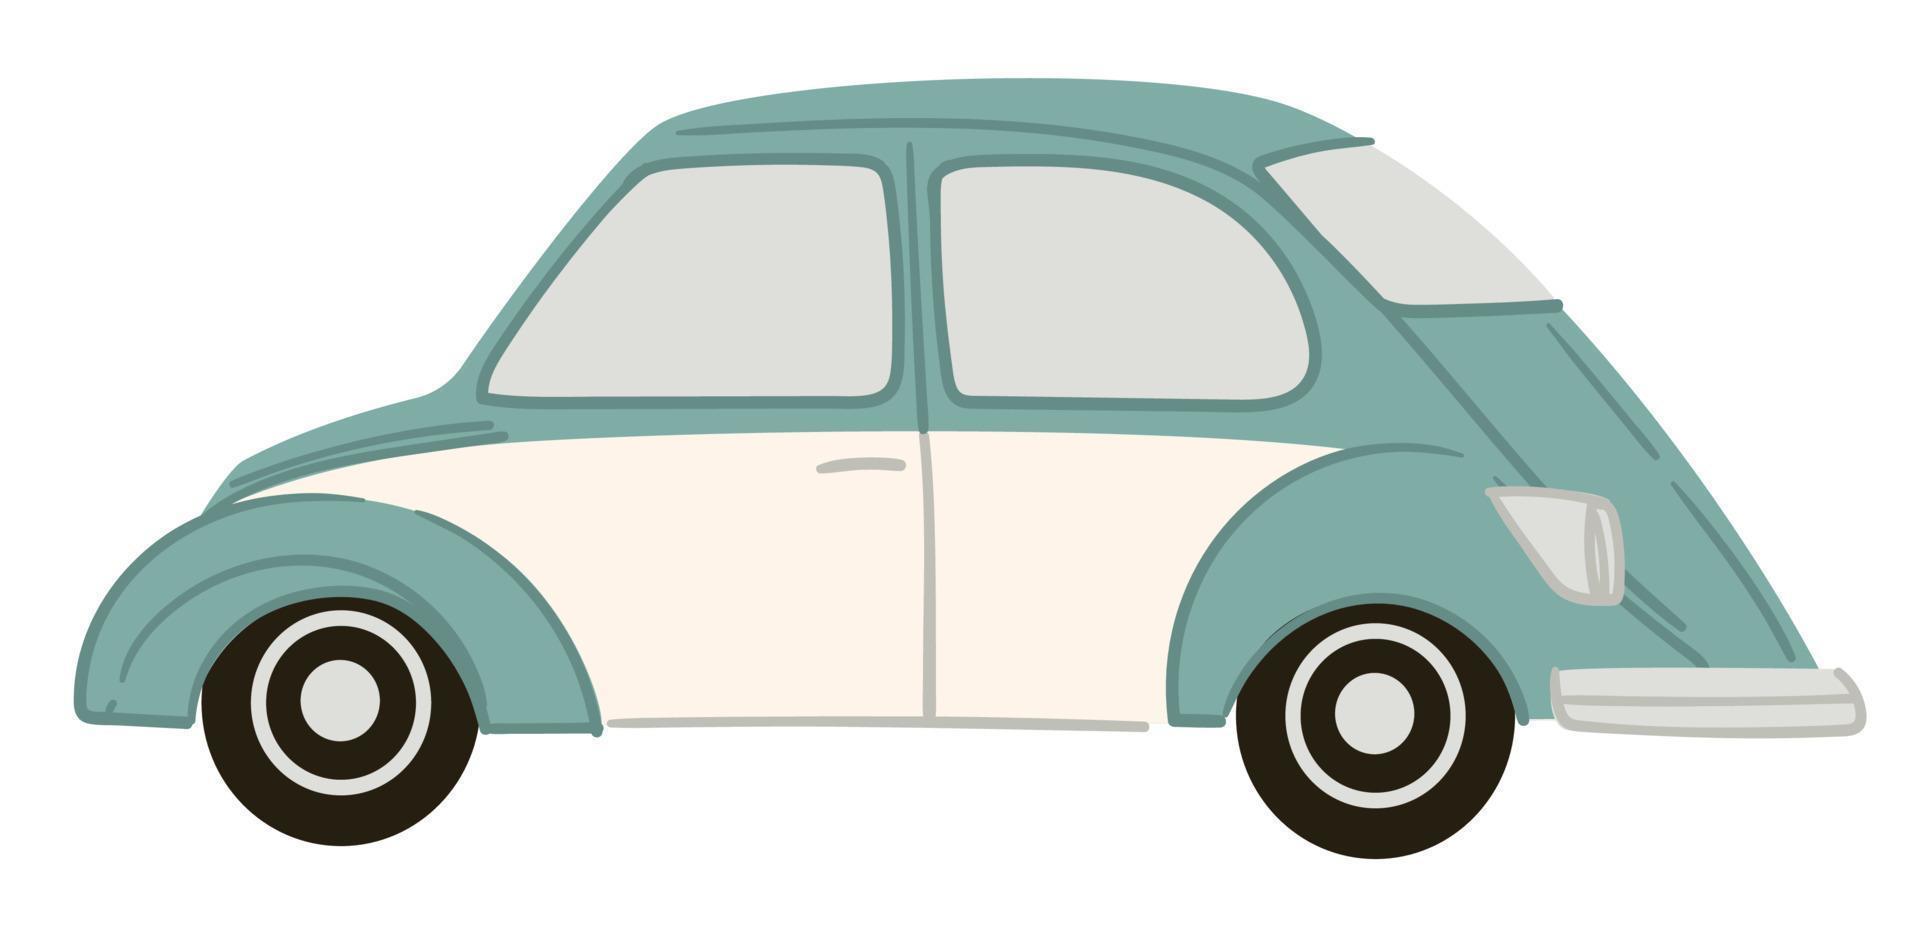 mini coche retro, transporte ecológico vintage vector